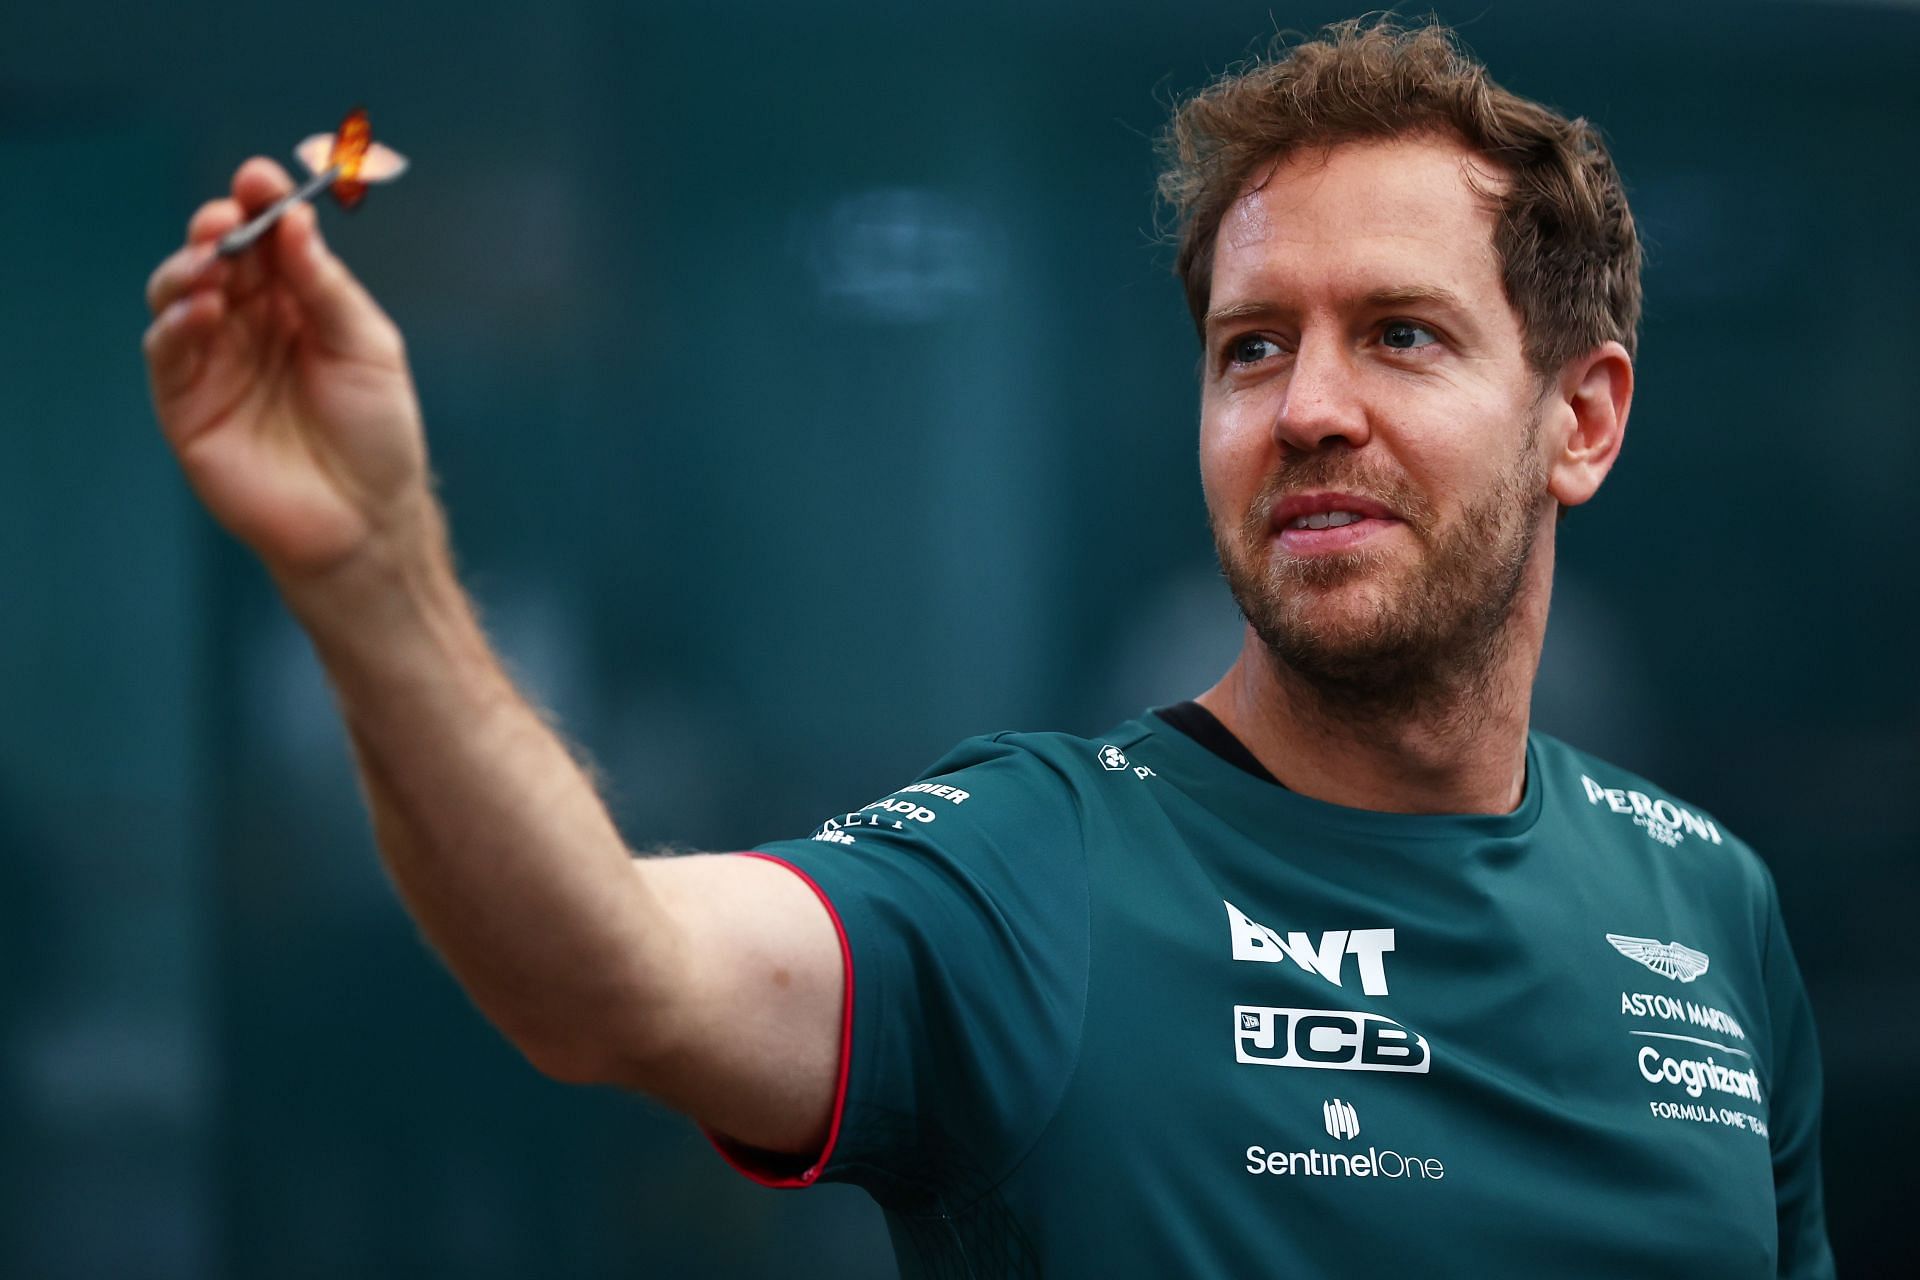 Sebastian Vettel could be racing in his last F1 season